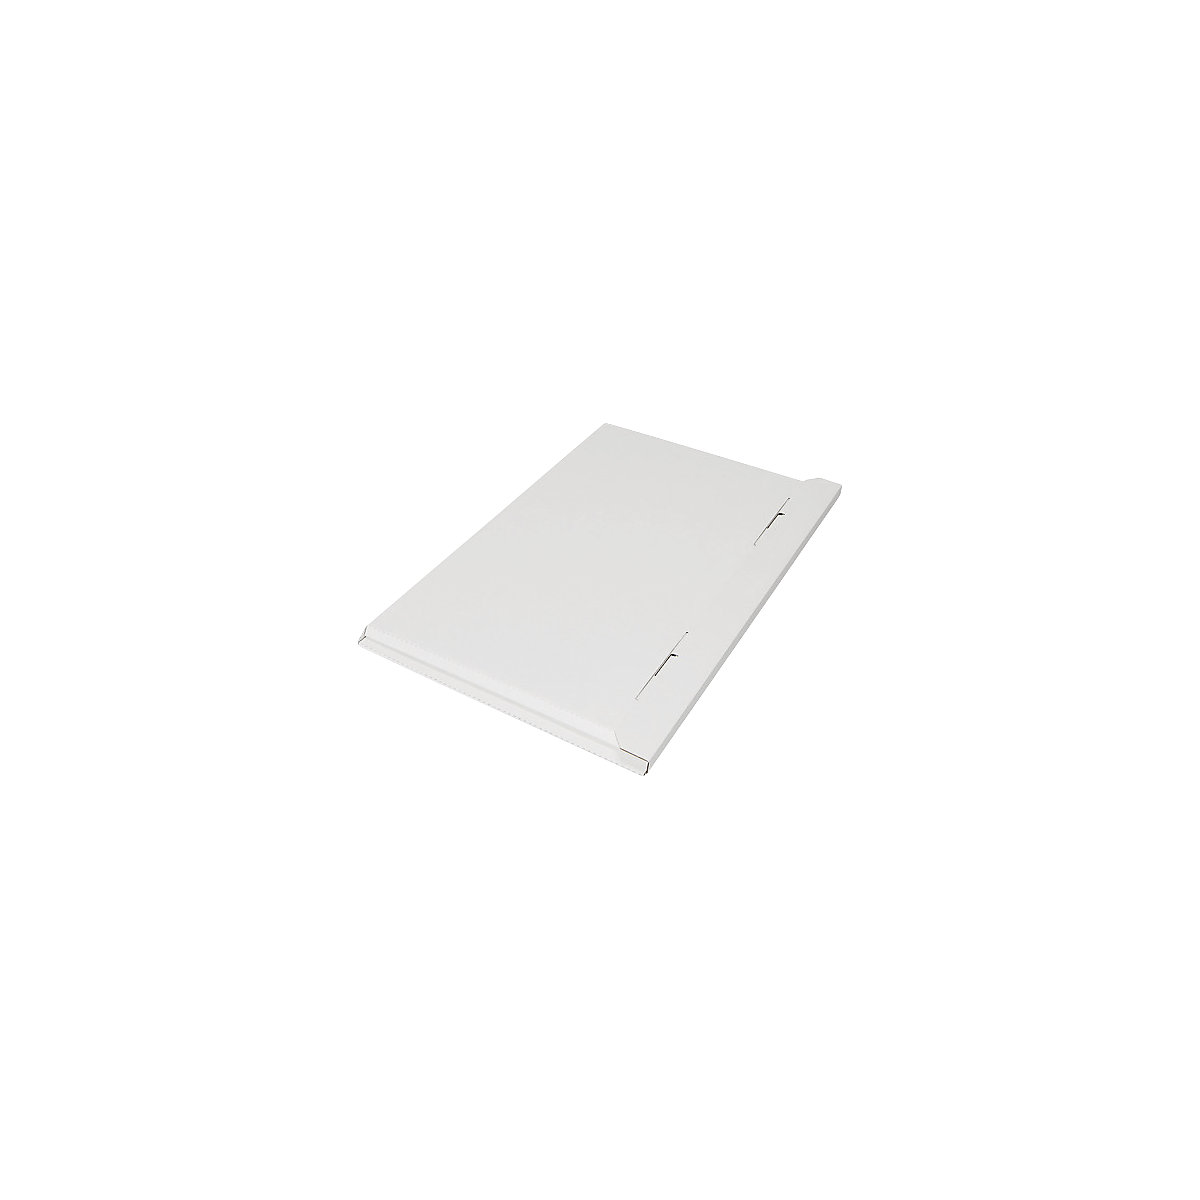 Flach-/Kalender-Pack, 1-wellig, Innen-LxBxH 630 x 450 x 10 mm, weiß, ab 200 Stk-8